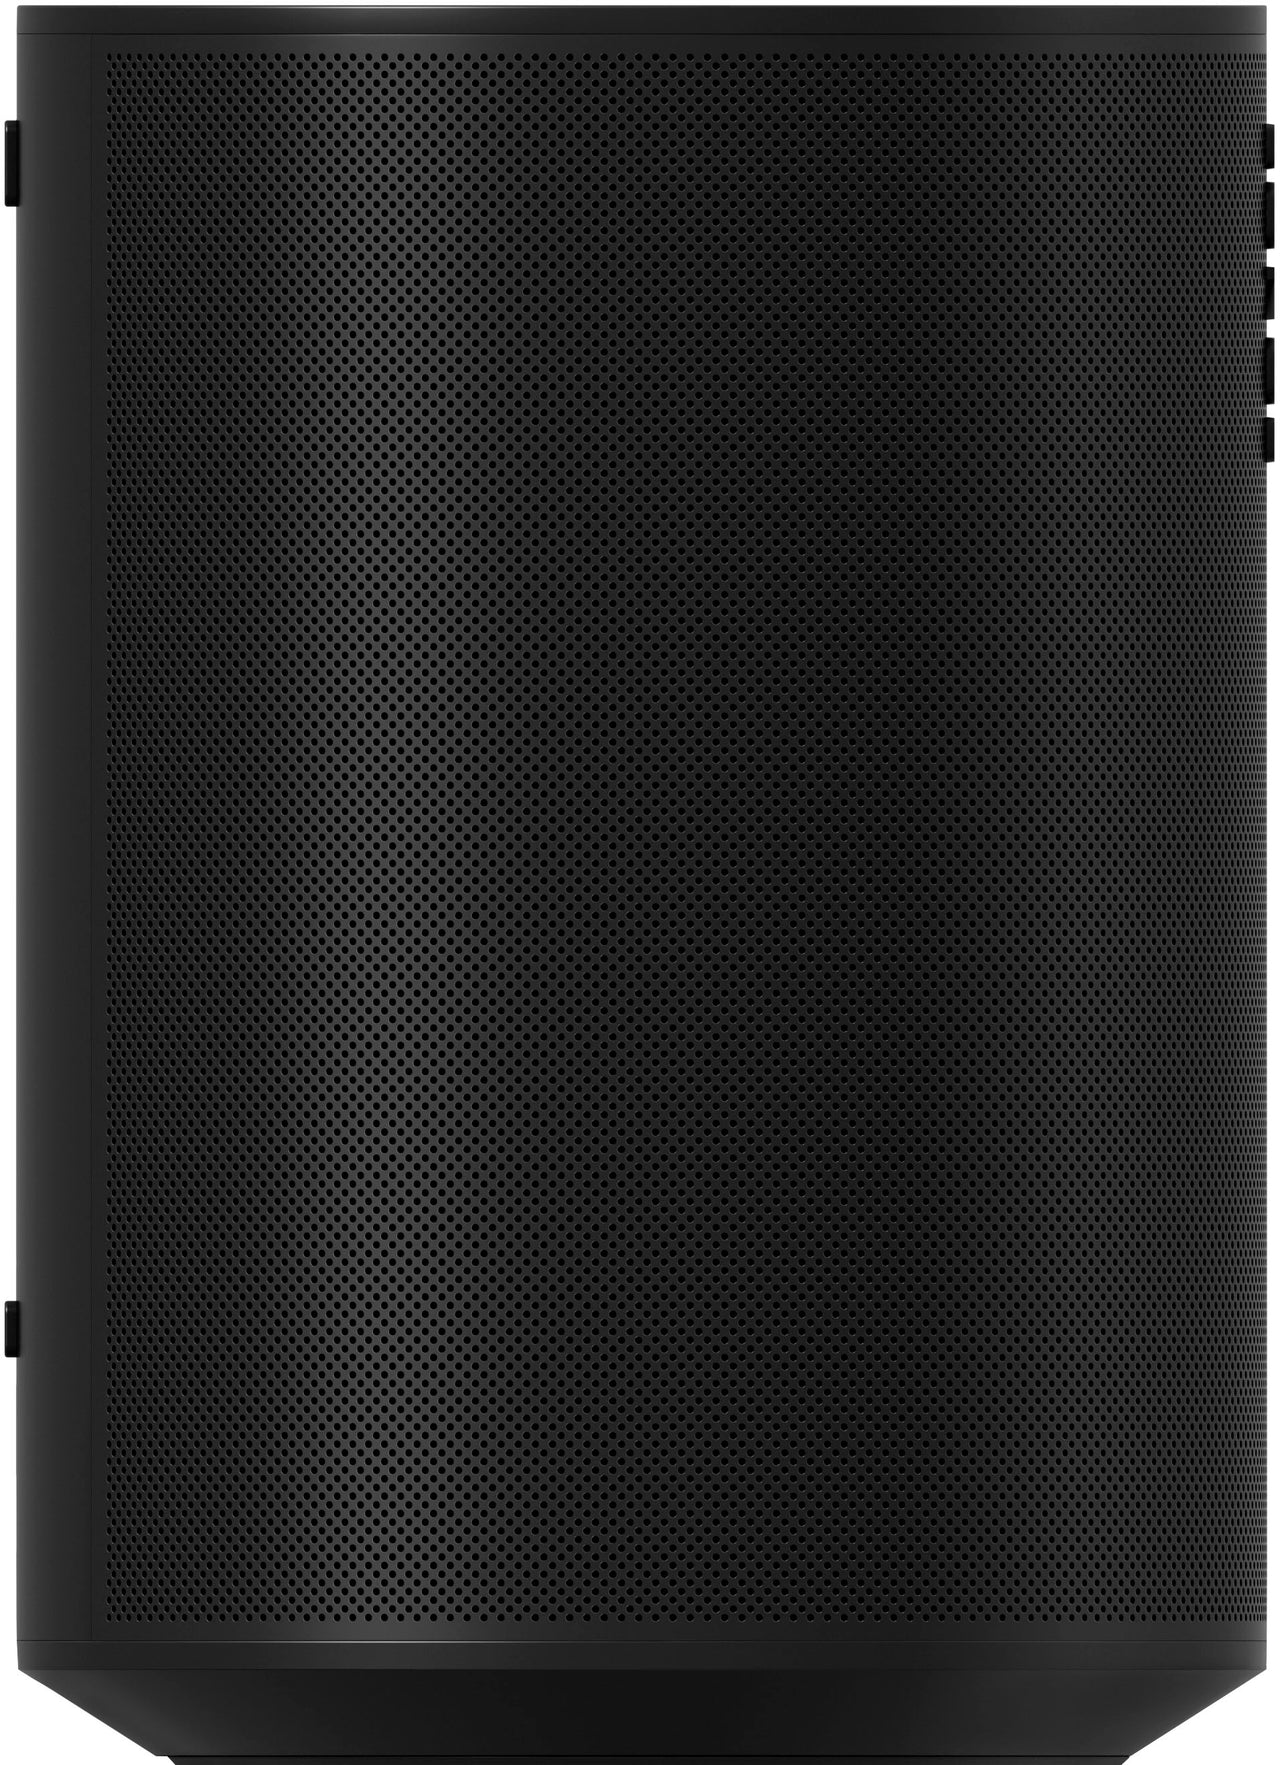 Sonos - Era 100 Speaker (Each) - Black